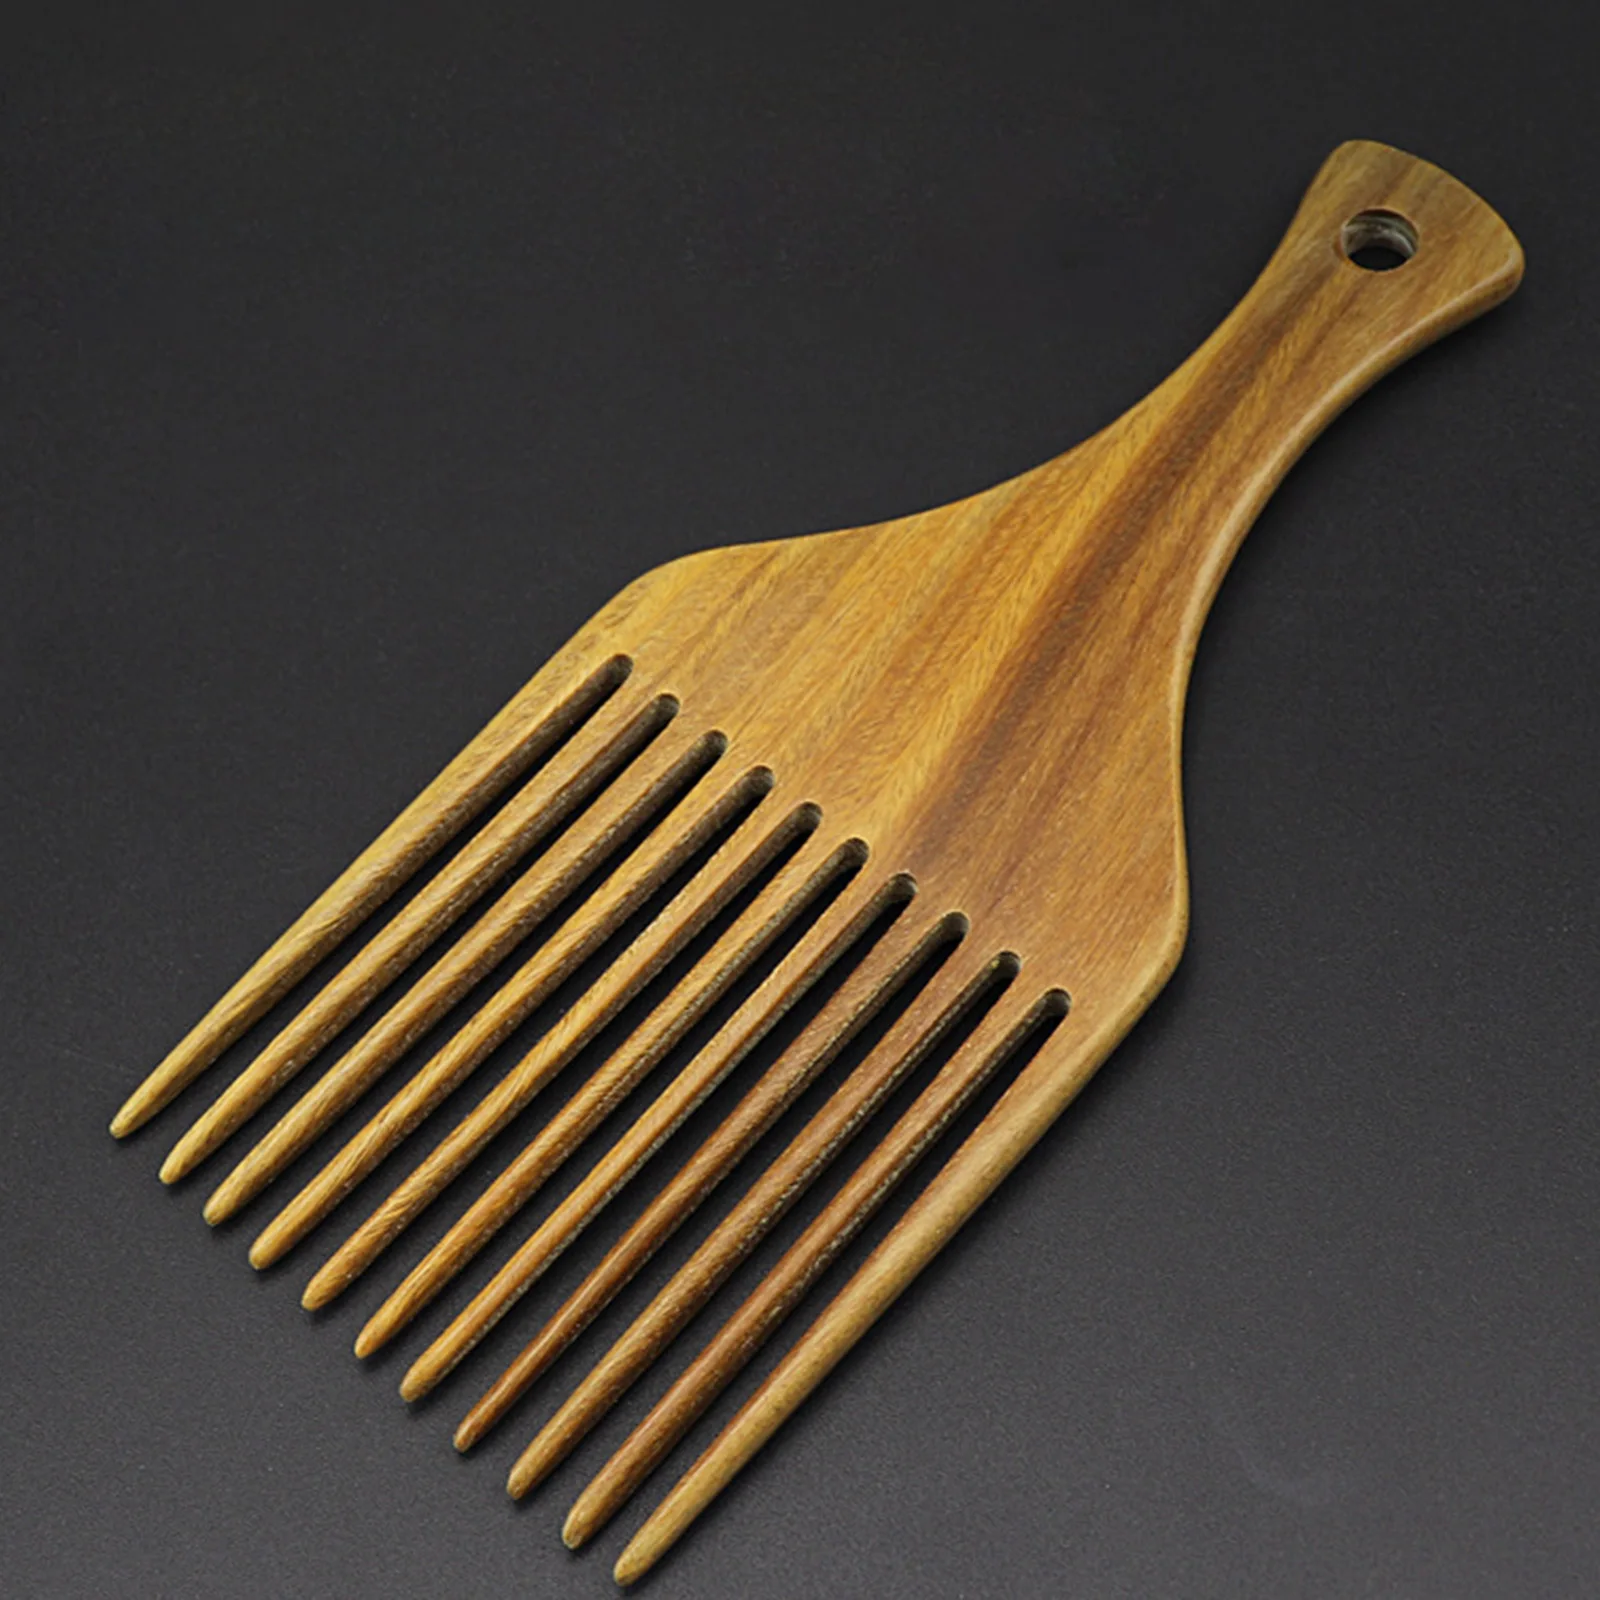 Wooden Afro Pick Comb Brush Hairdressing Tool for Hair Pick Sandalwood